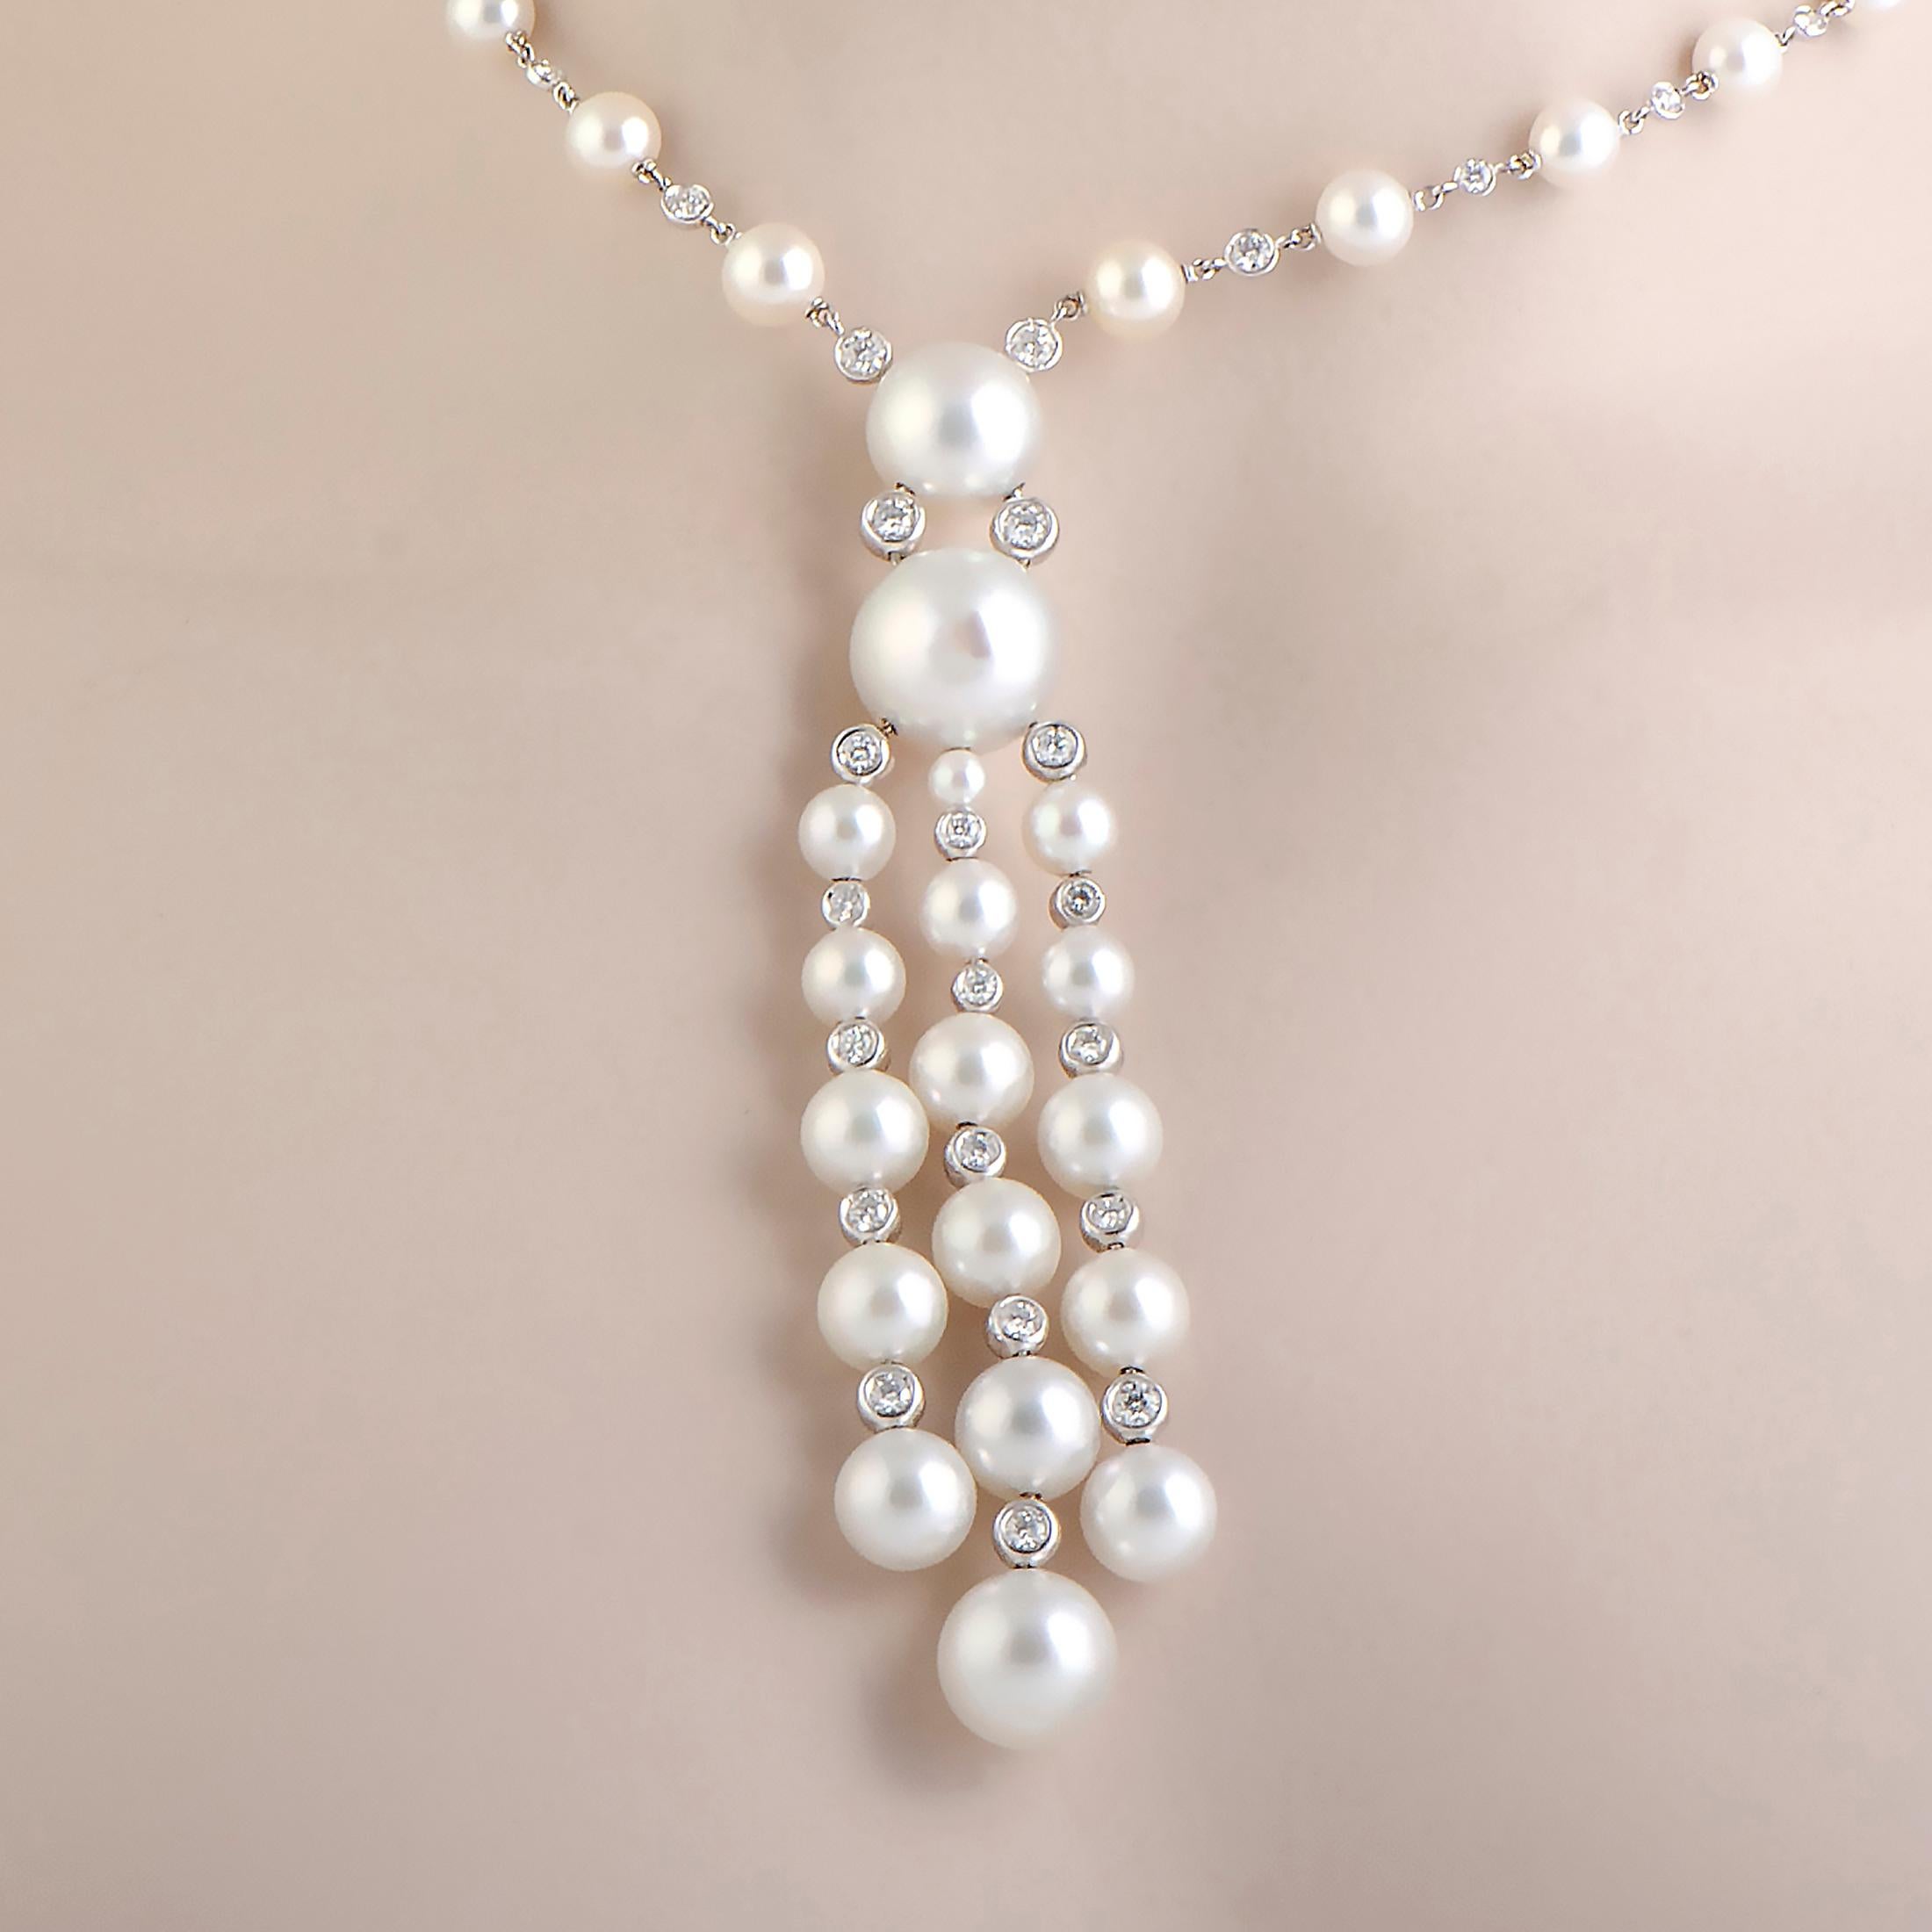 Women's Stefan Hafner Diamond and White Pearl Riviere String White Gold Pendant Necklace